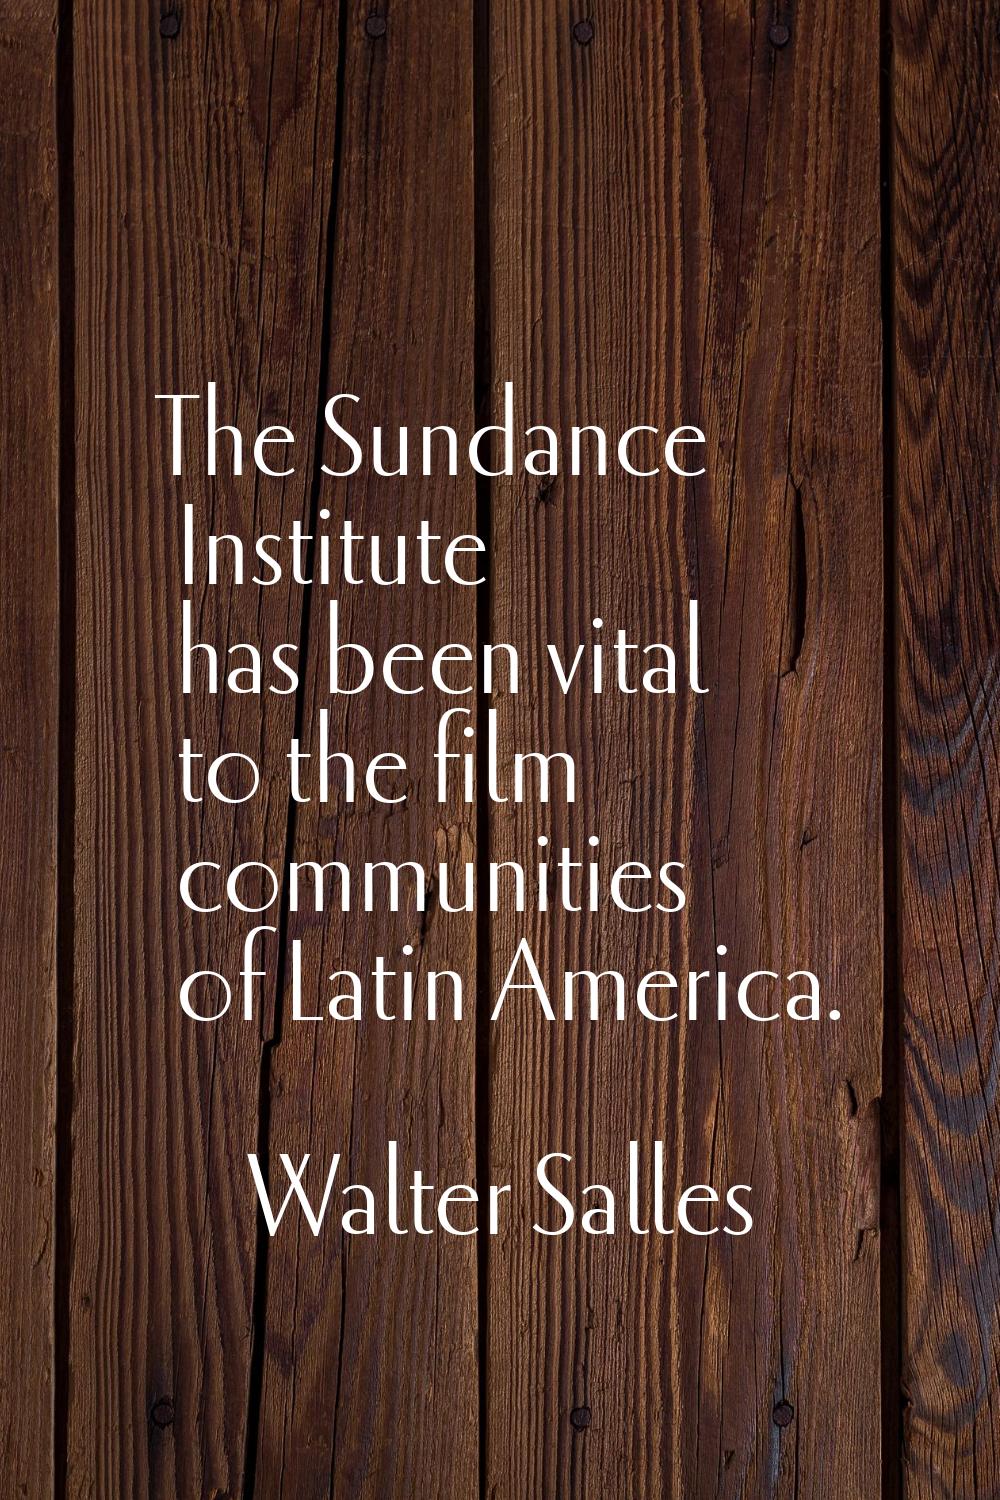 The Sundance Institute has been vital to the film communities of Latin America.